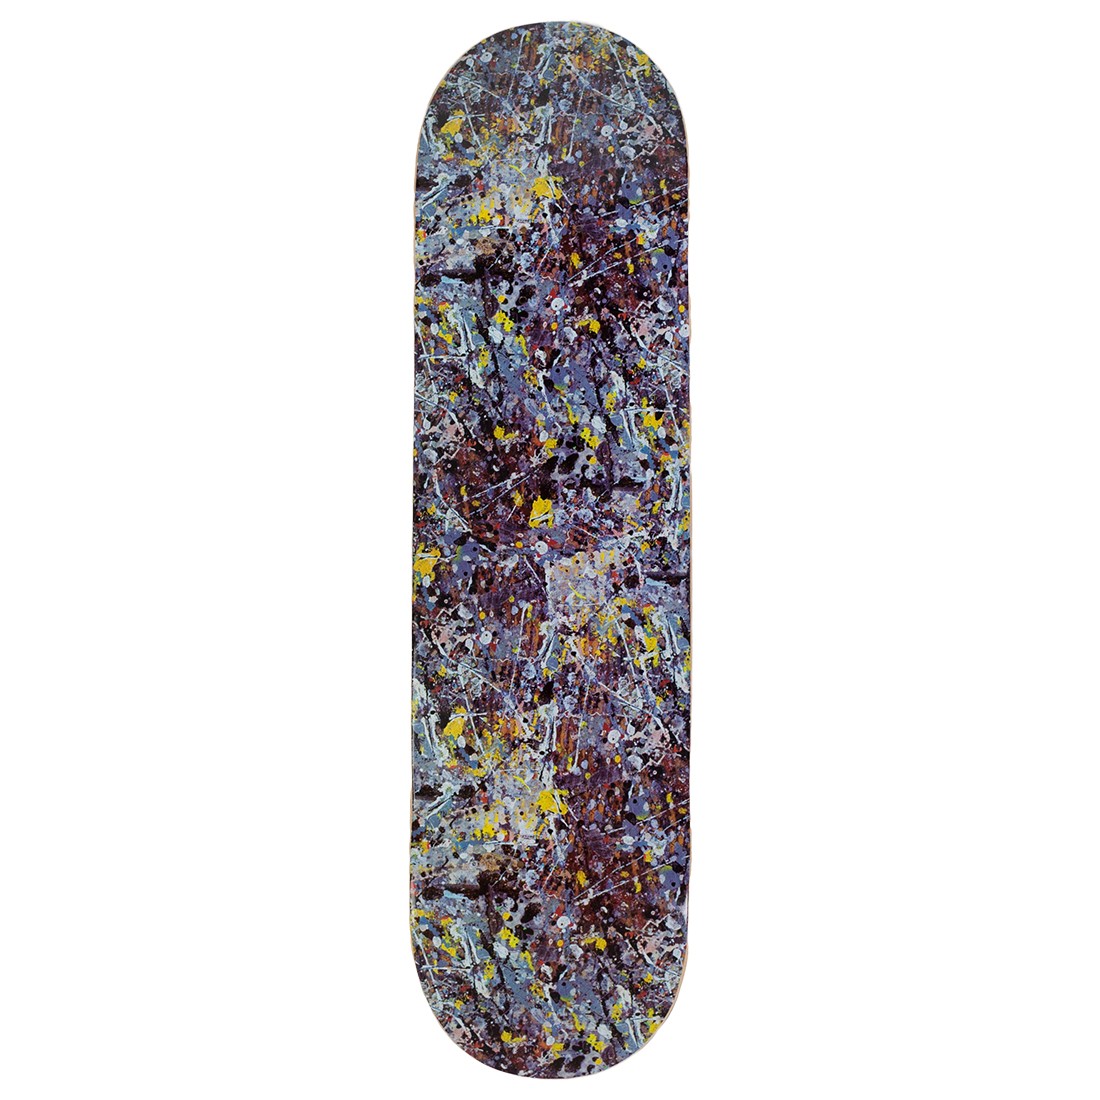 Medicom x SYNC Jackson Pollock Studio Skateboard Deck (blue / multi)